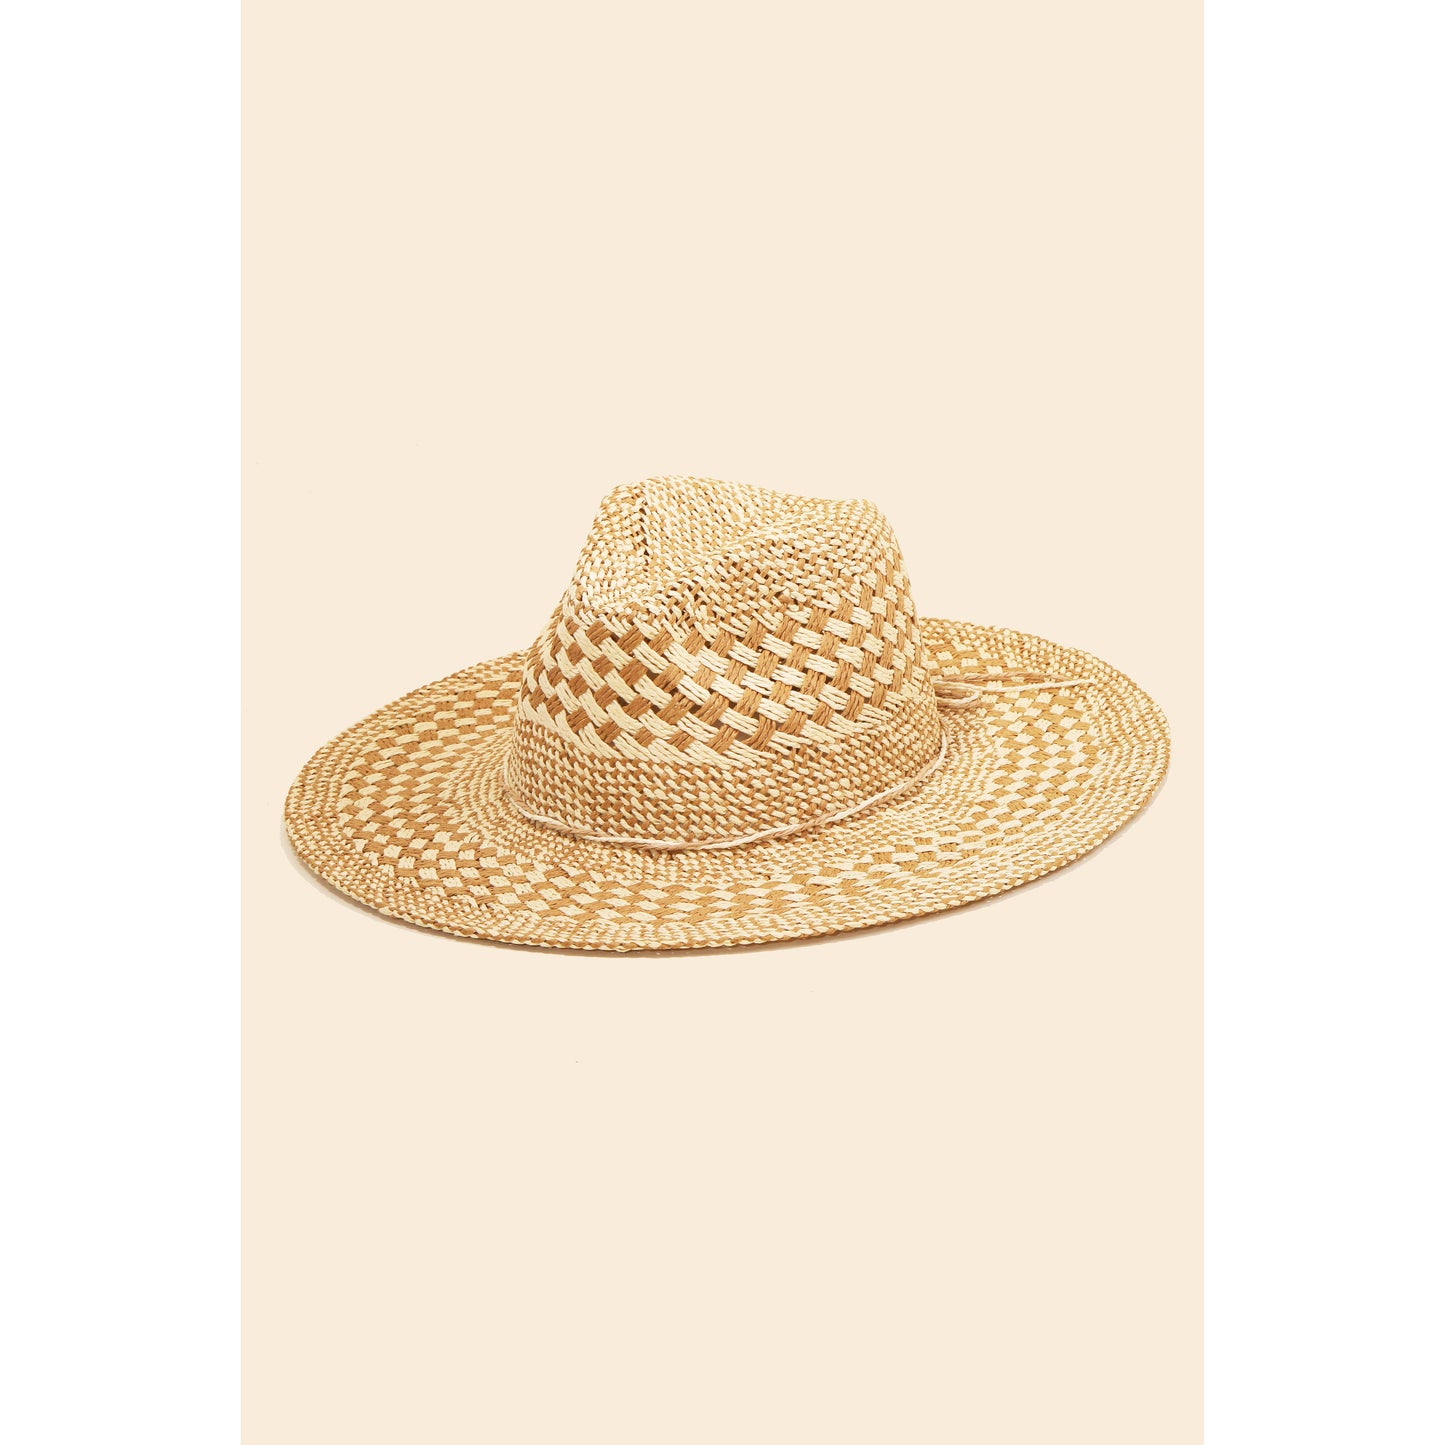 Anarchy Street - Checkered Straw Weave Sun Hat: FU